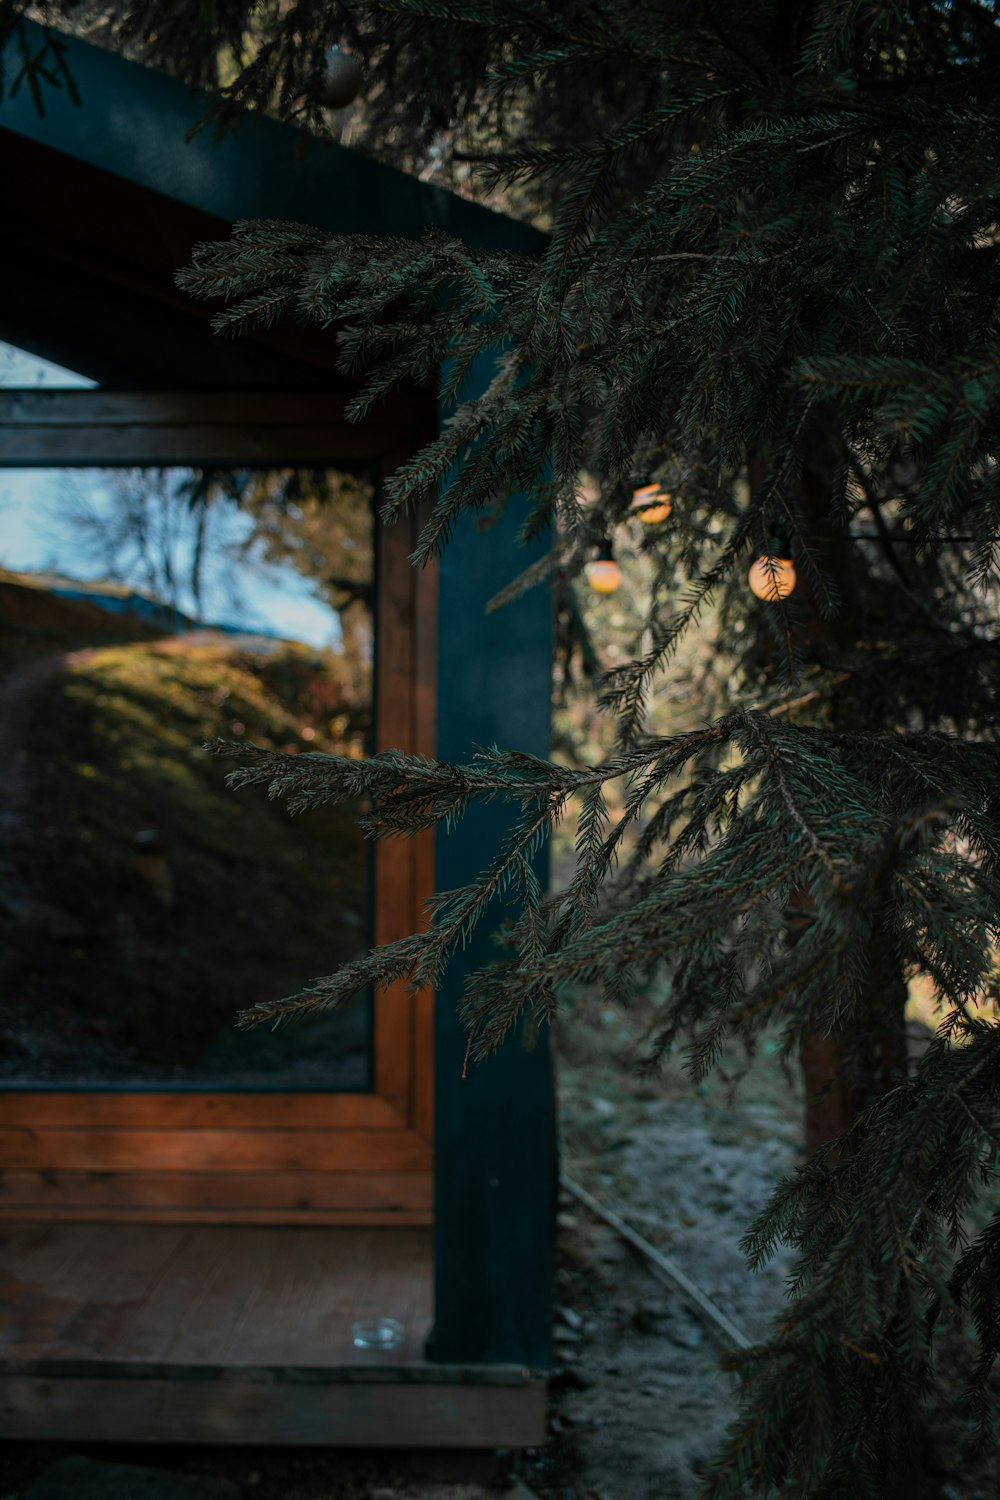 a close up of a pine tree near a door